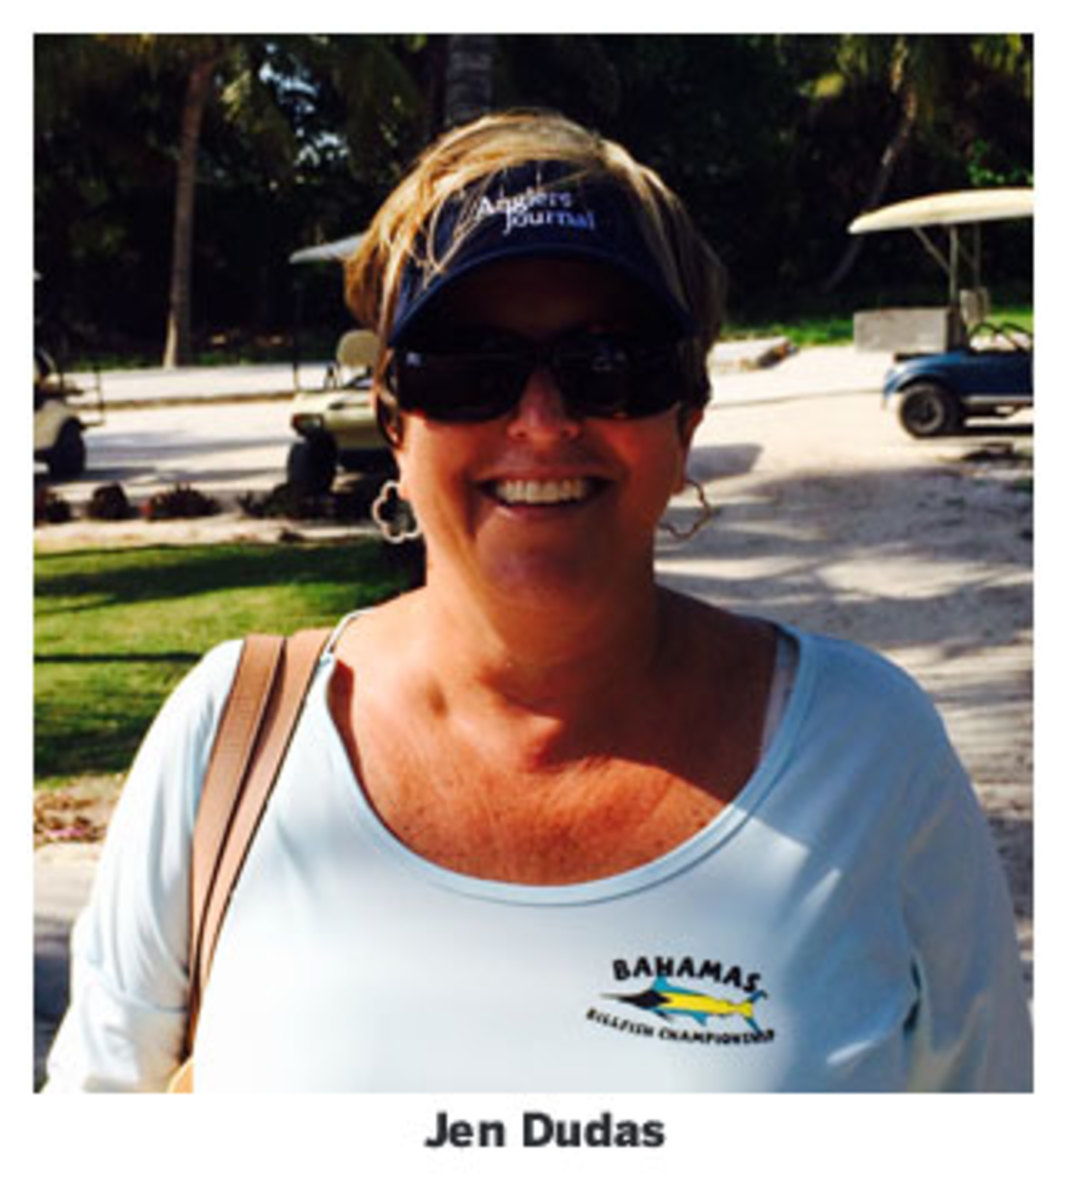 Jen Dudas, the director of the Bahamas Billfish Championship